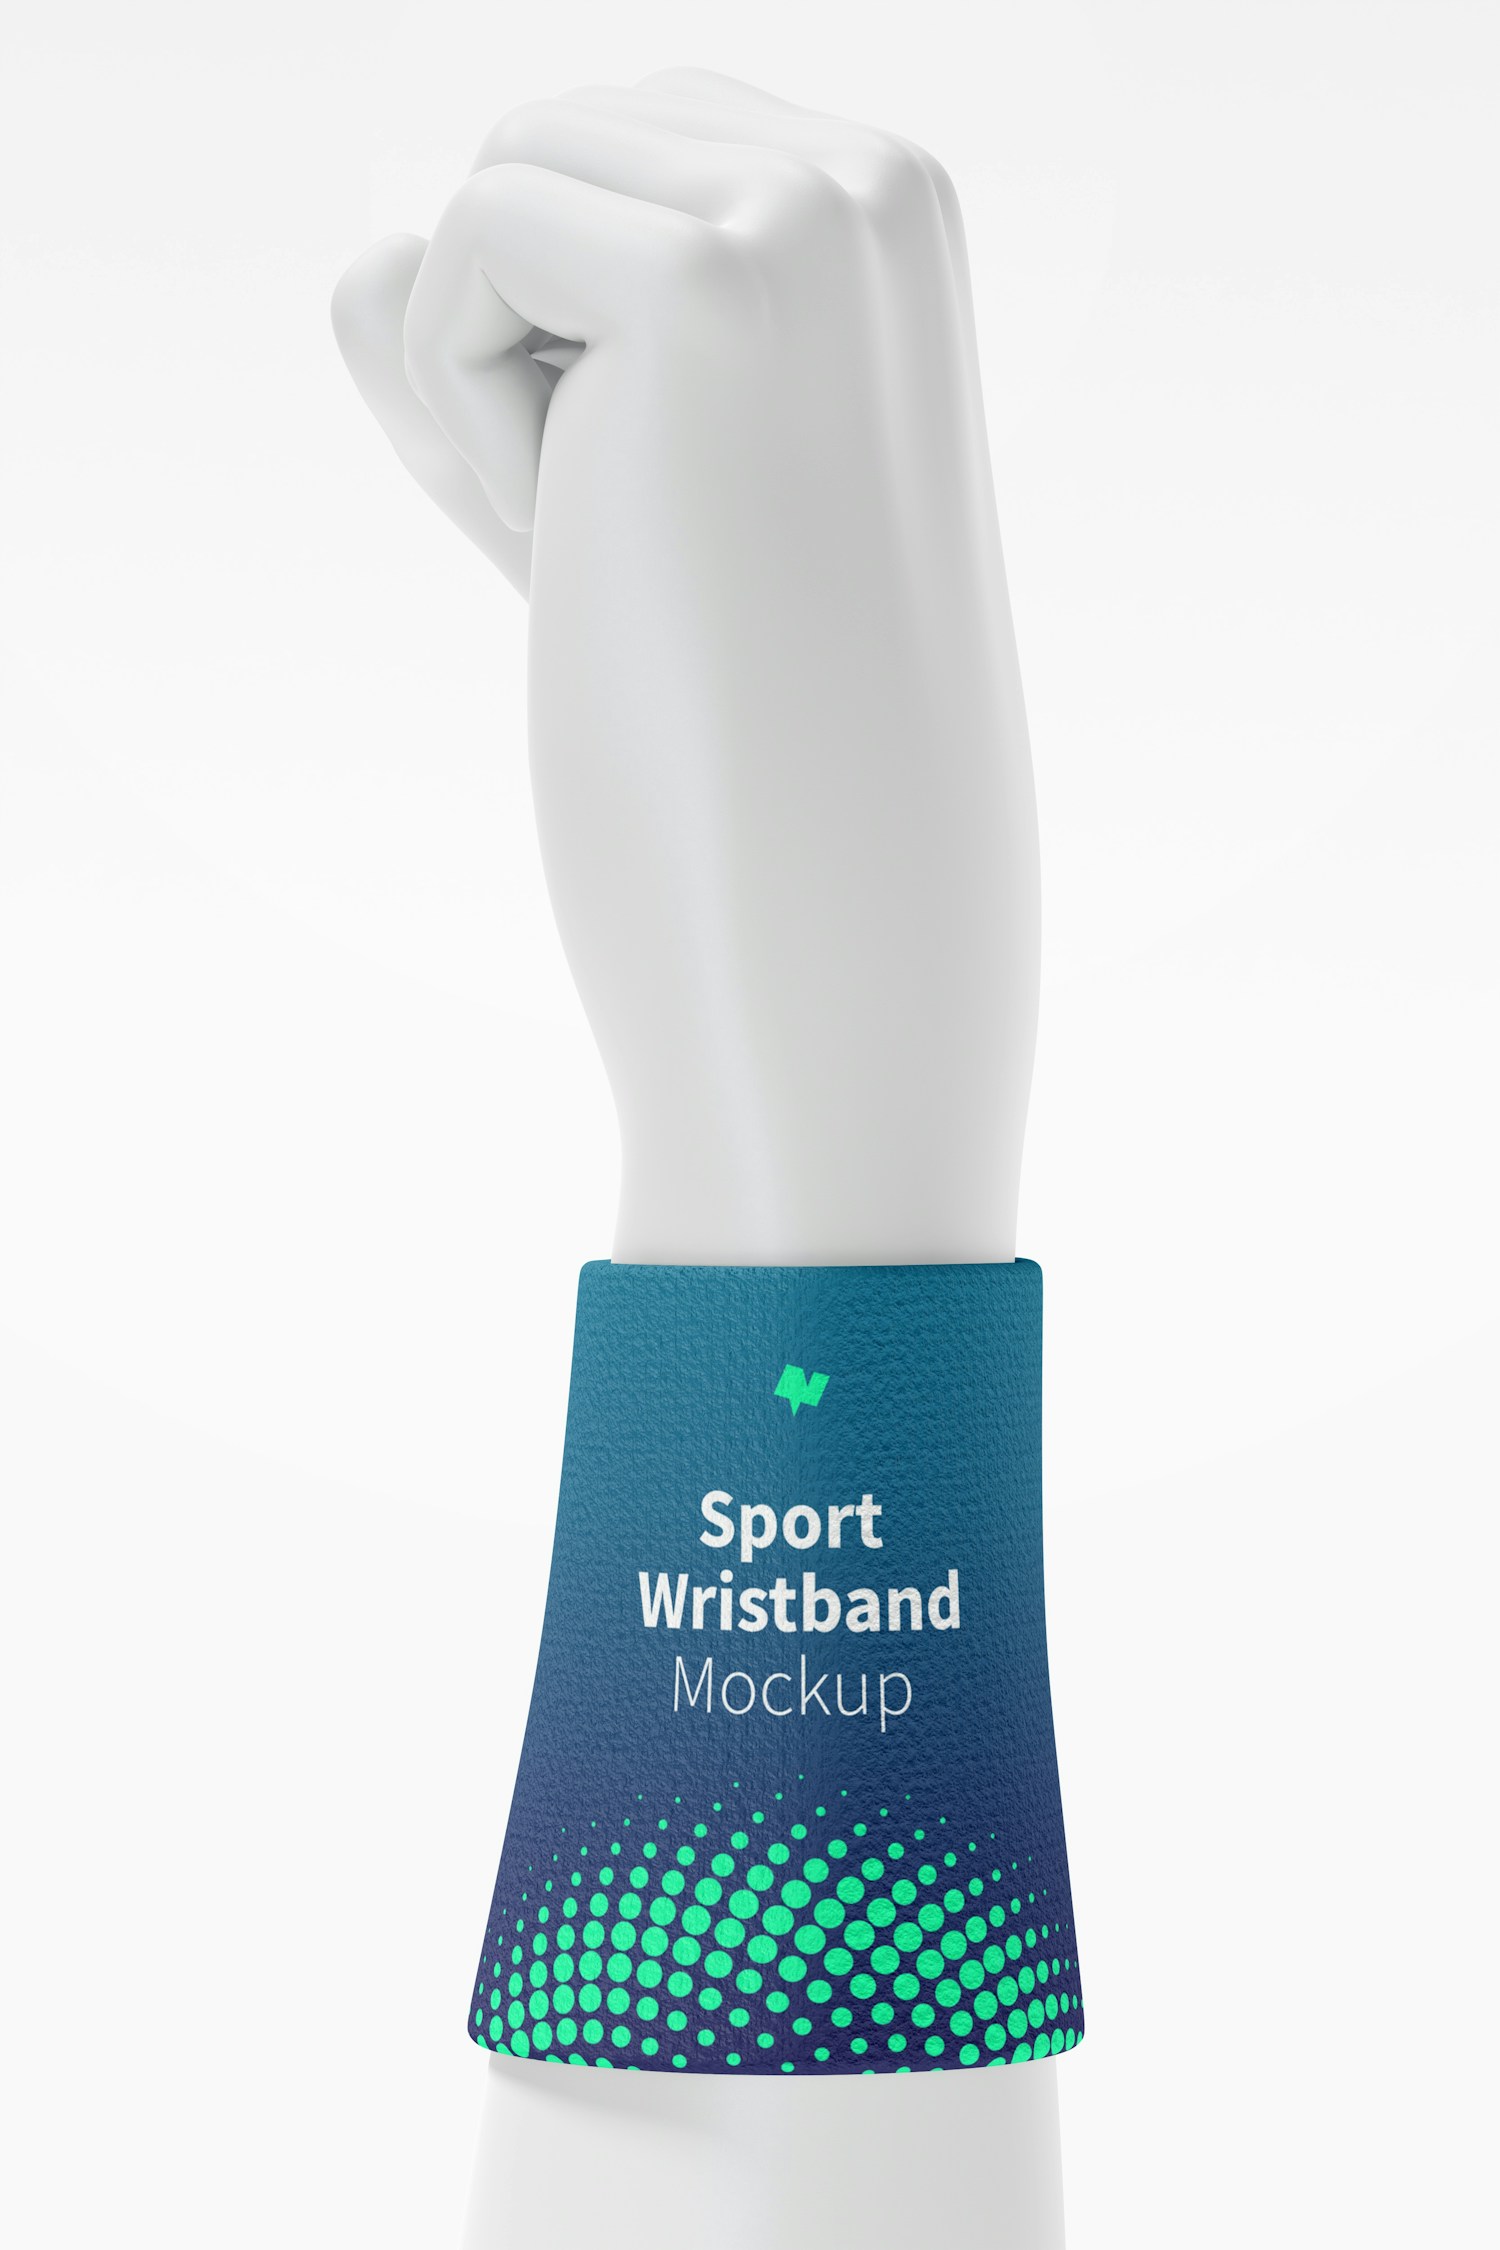 Sport Wristband with Hand Mockup